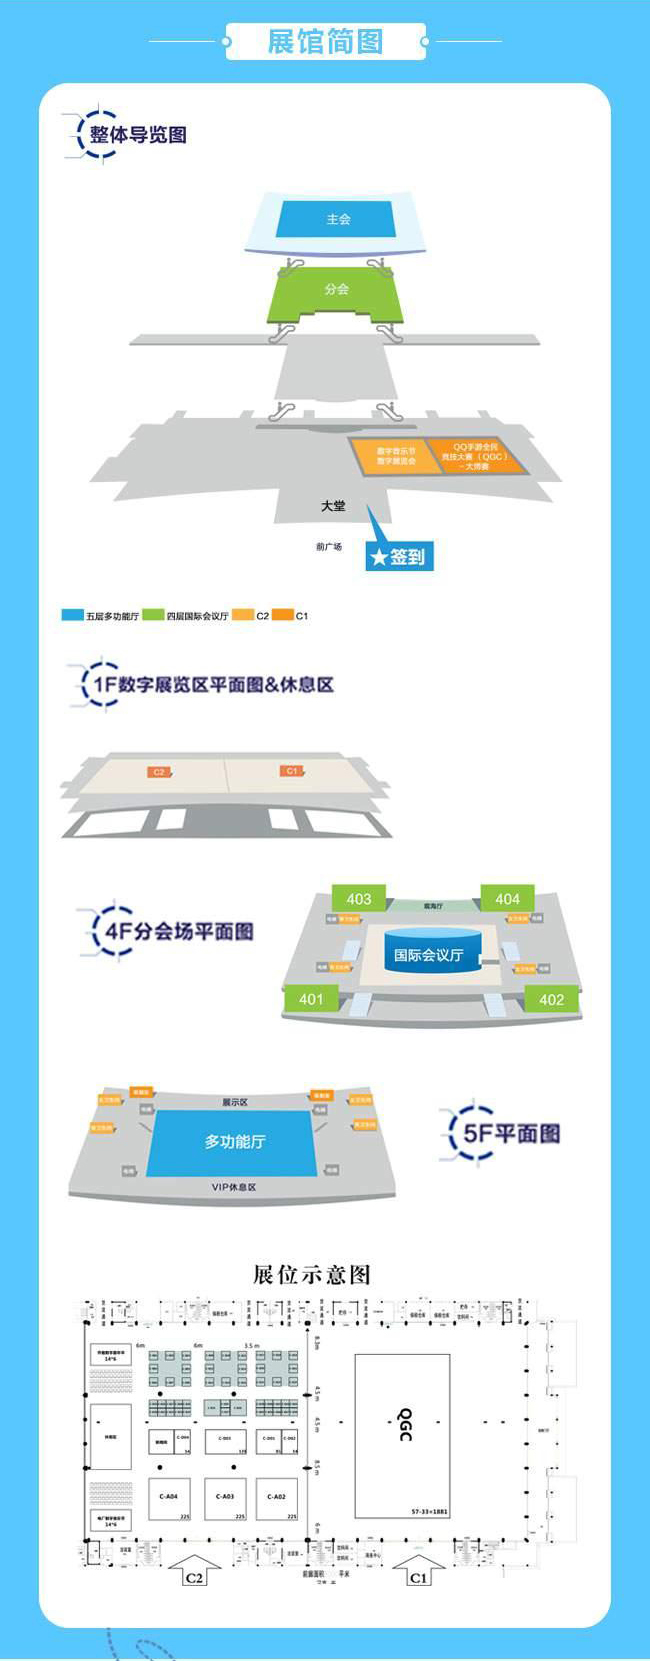 DCC中国数字产业峰会跑会指南 玩乐住行攻略[多图]图片2